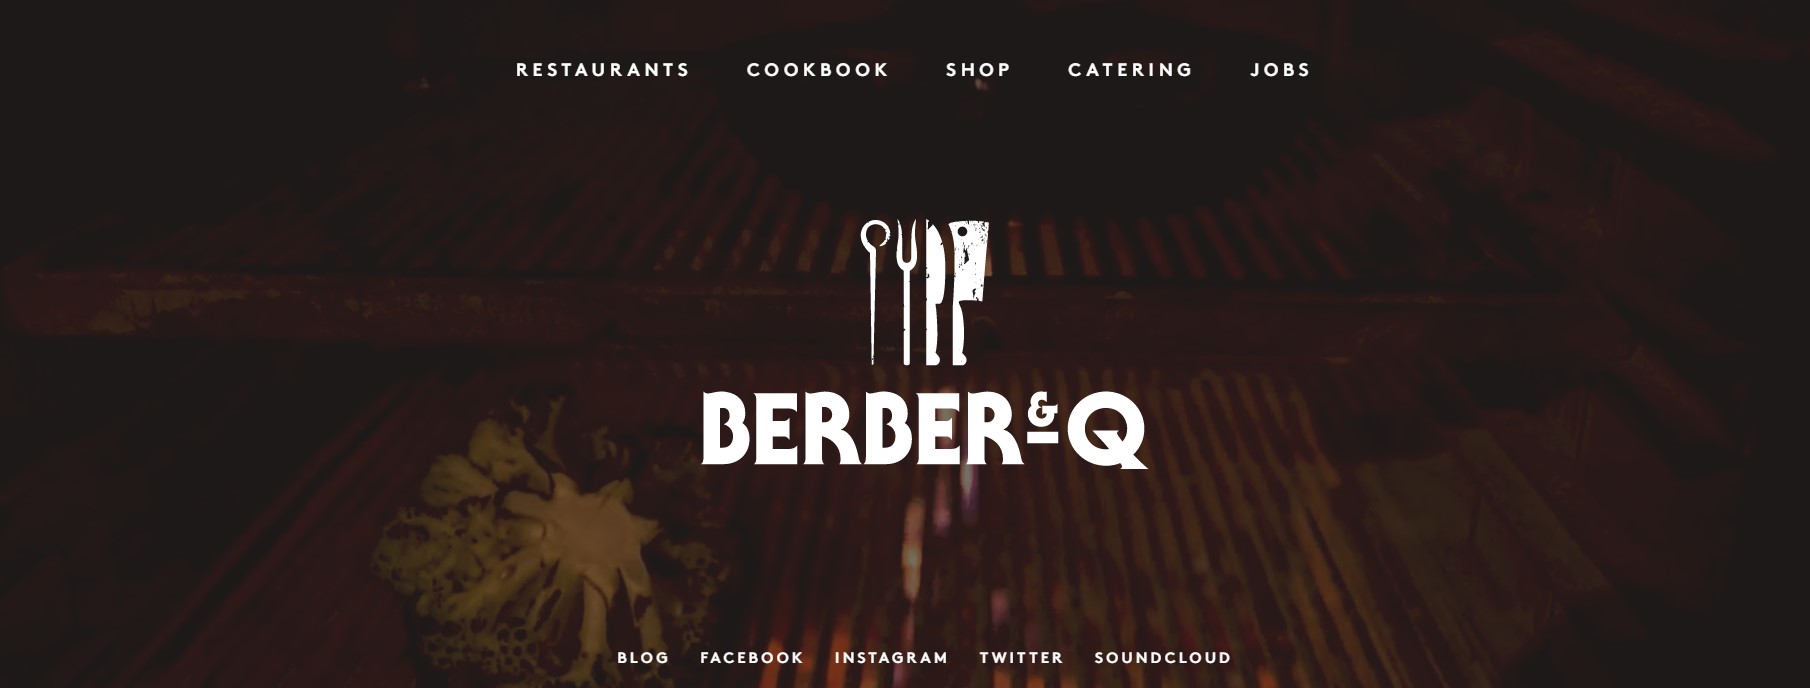 Berber & Q